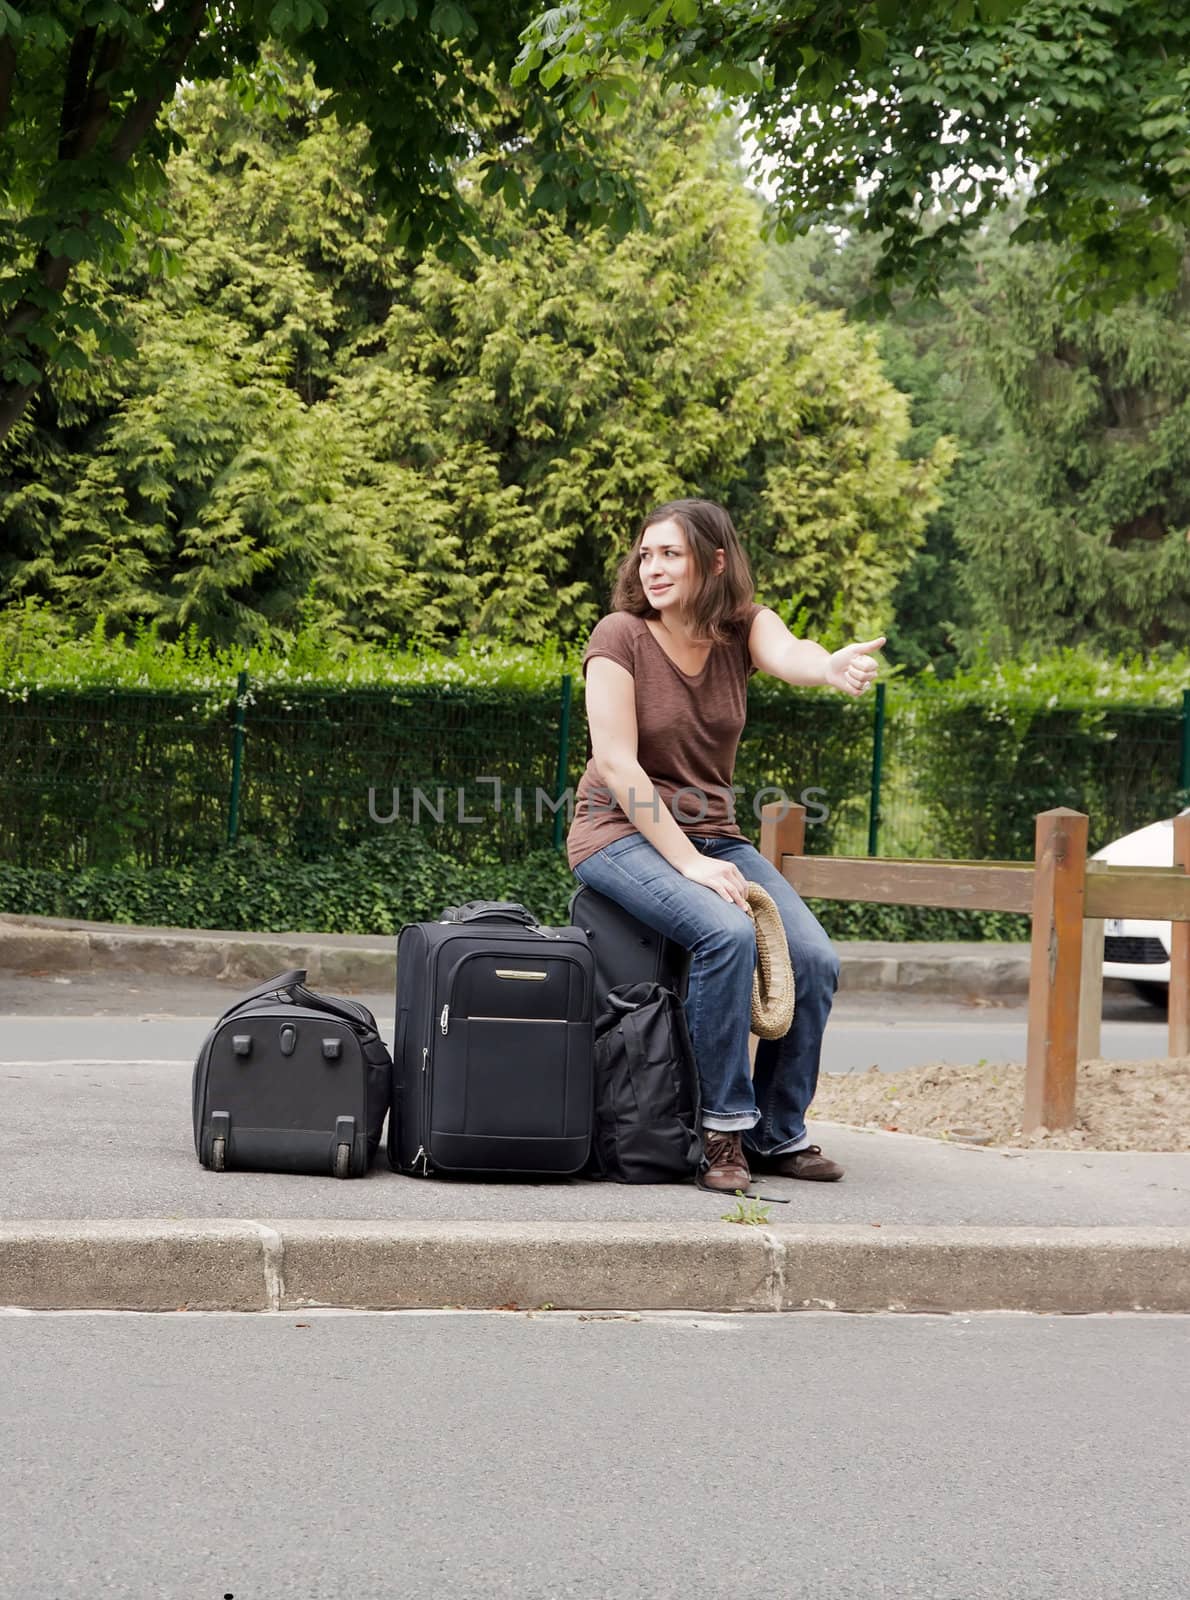 woman making hitchhiking, sitting on his luggage